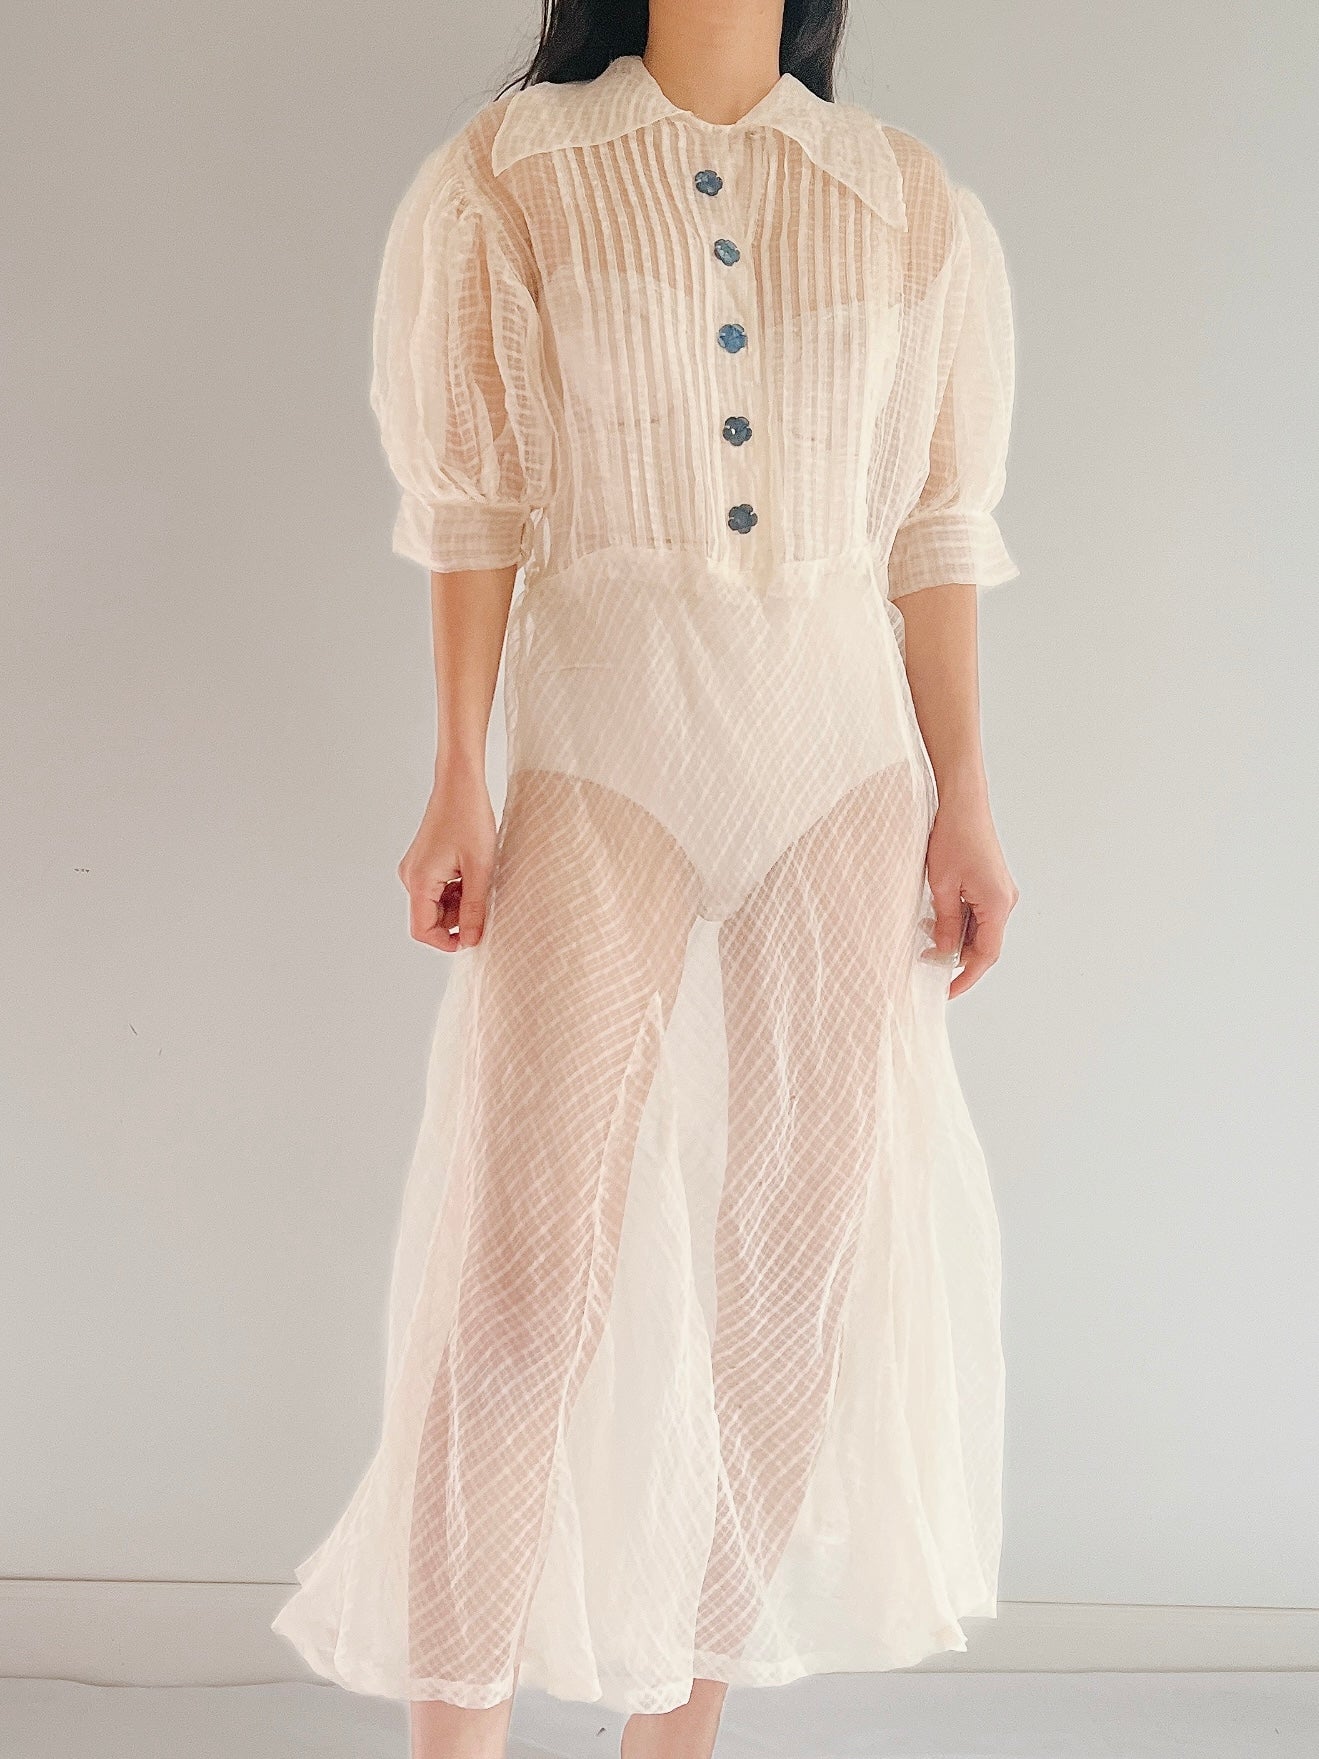 1940s Organdy Puff Sleeve Dress - M